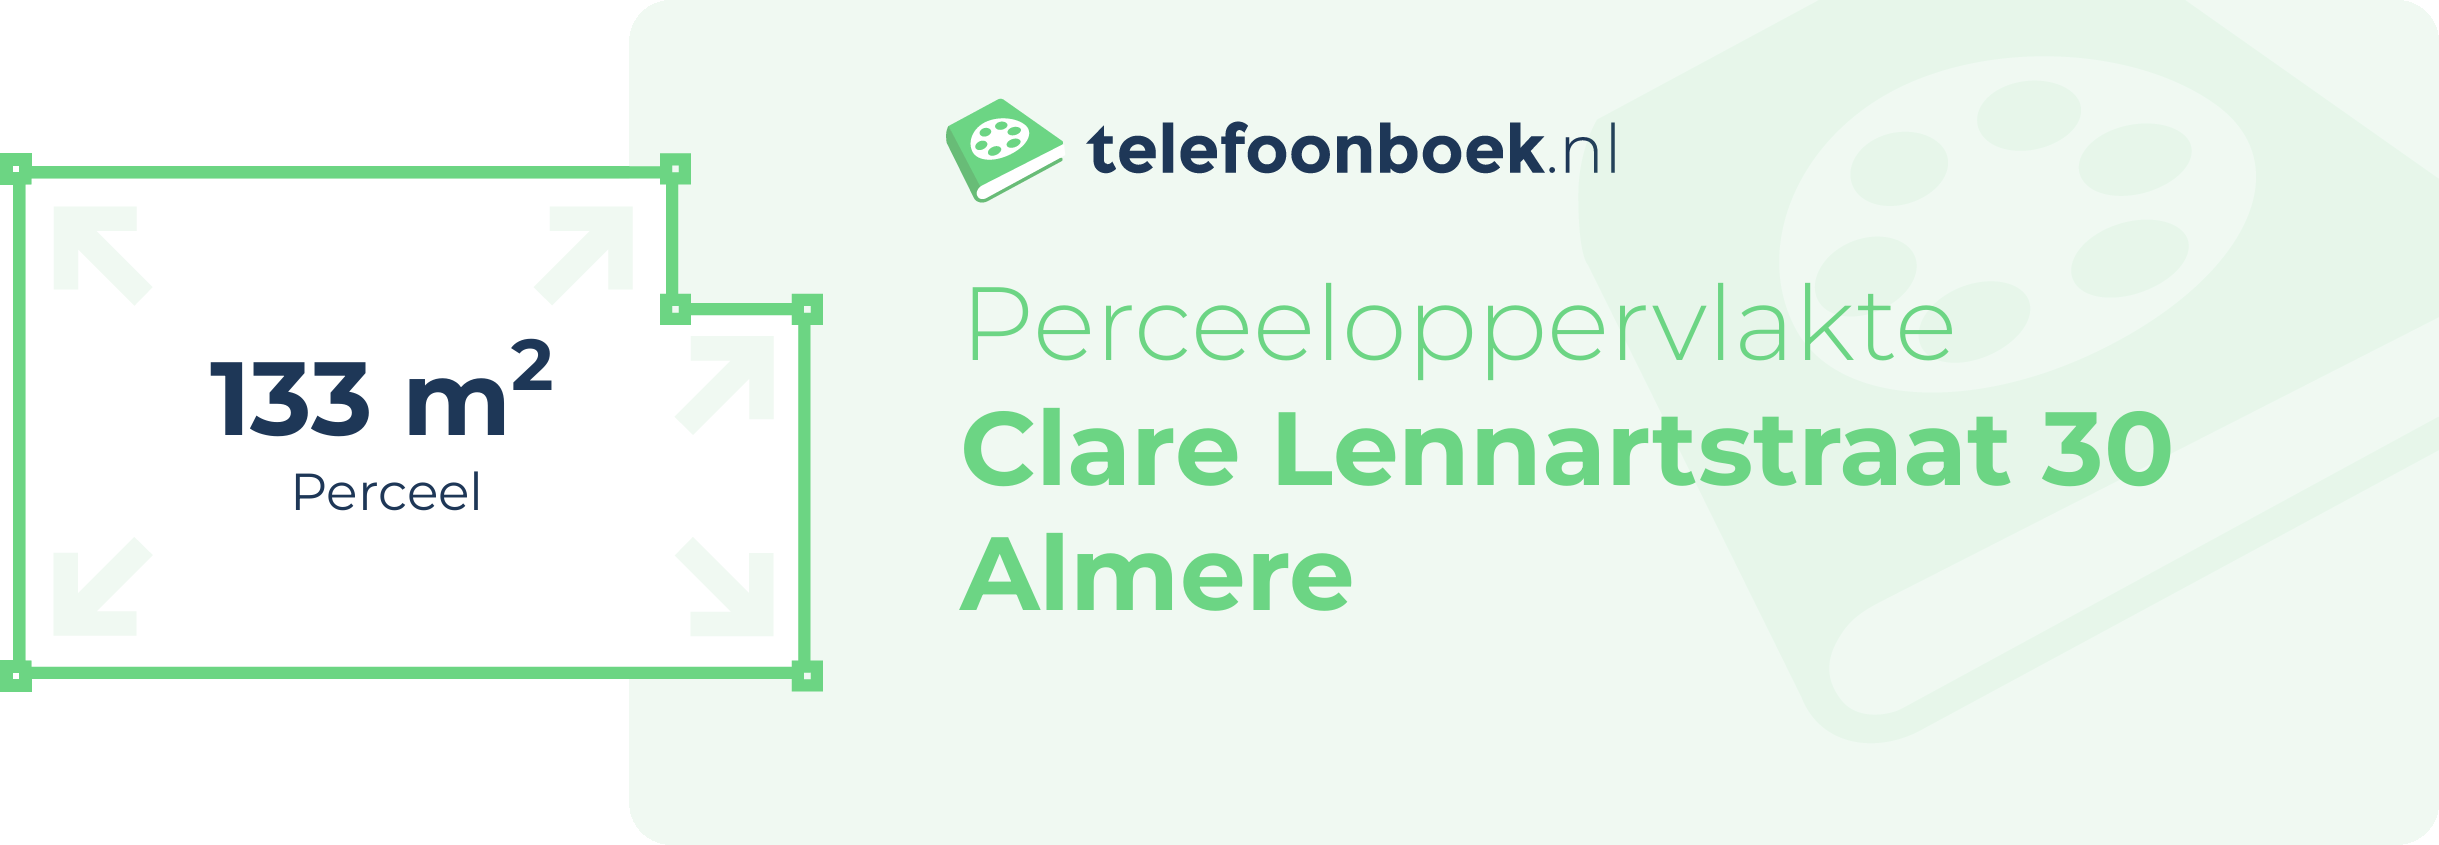 Perceeloppervlakte Clare Lennartstraat 30 Almere